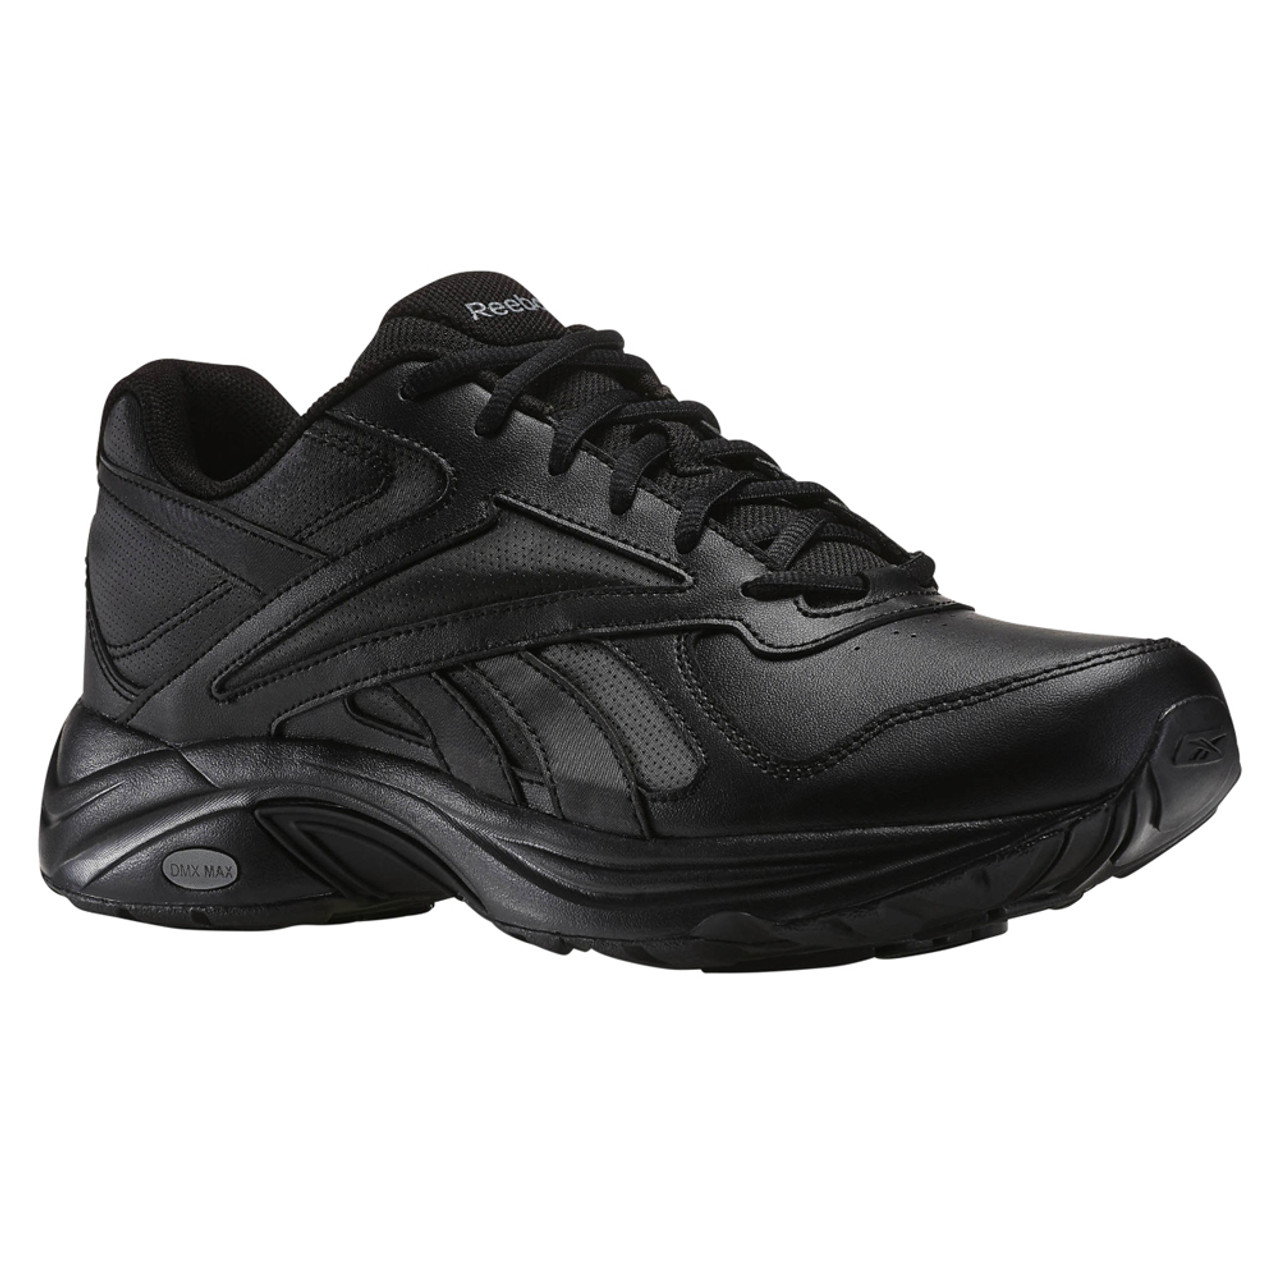 Reebok Men's Walk Ultra V DMX Max Walking Shoe - Black Discount Reebok Men's Athletic & More - Shoolu.com Shoolu.com